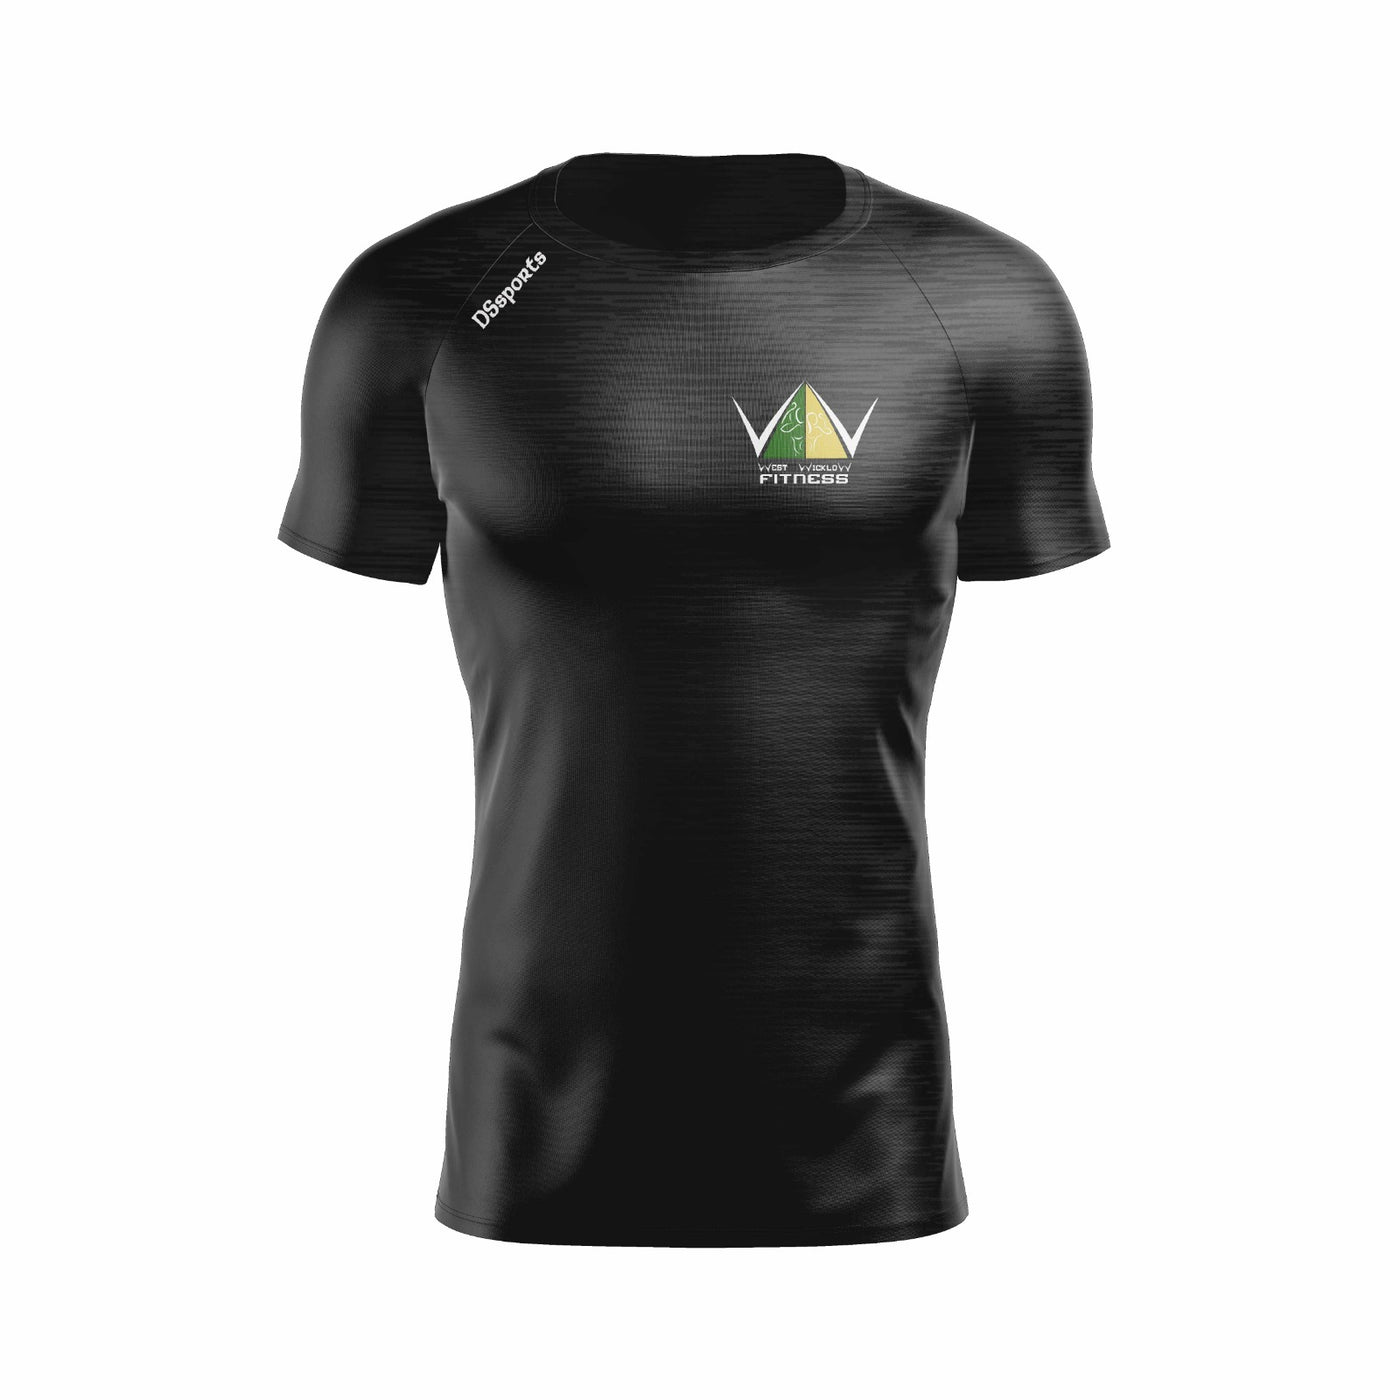 West Wicklow Fitness - T-Shirt (Black Melange)